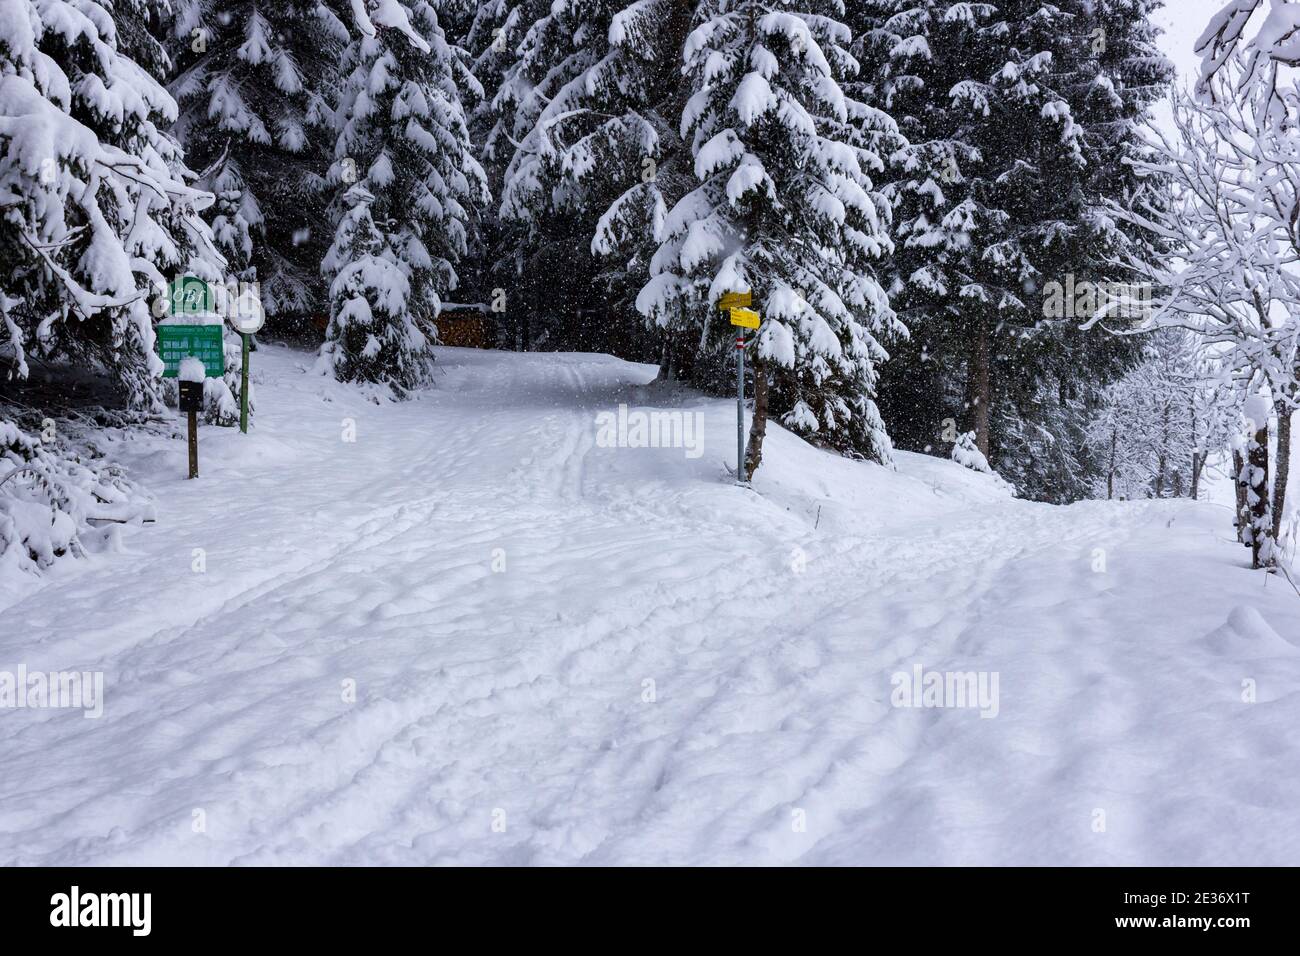 Filzmoos, Salzburg county, Austria - January 13 2016: Beautiful winter landscape in the Austrian alps with snowfall Stock Photo